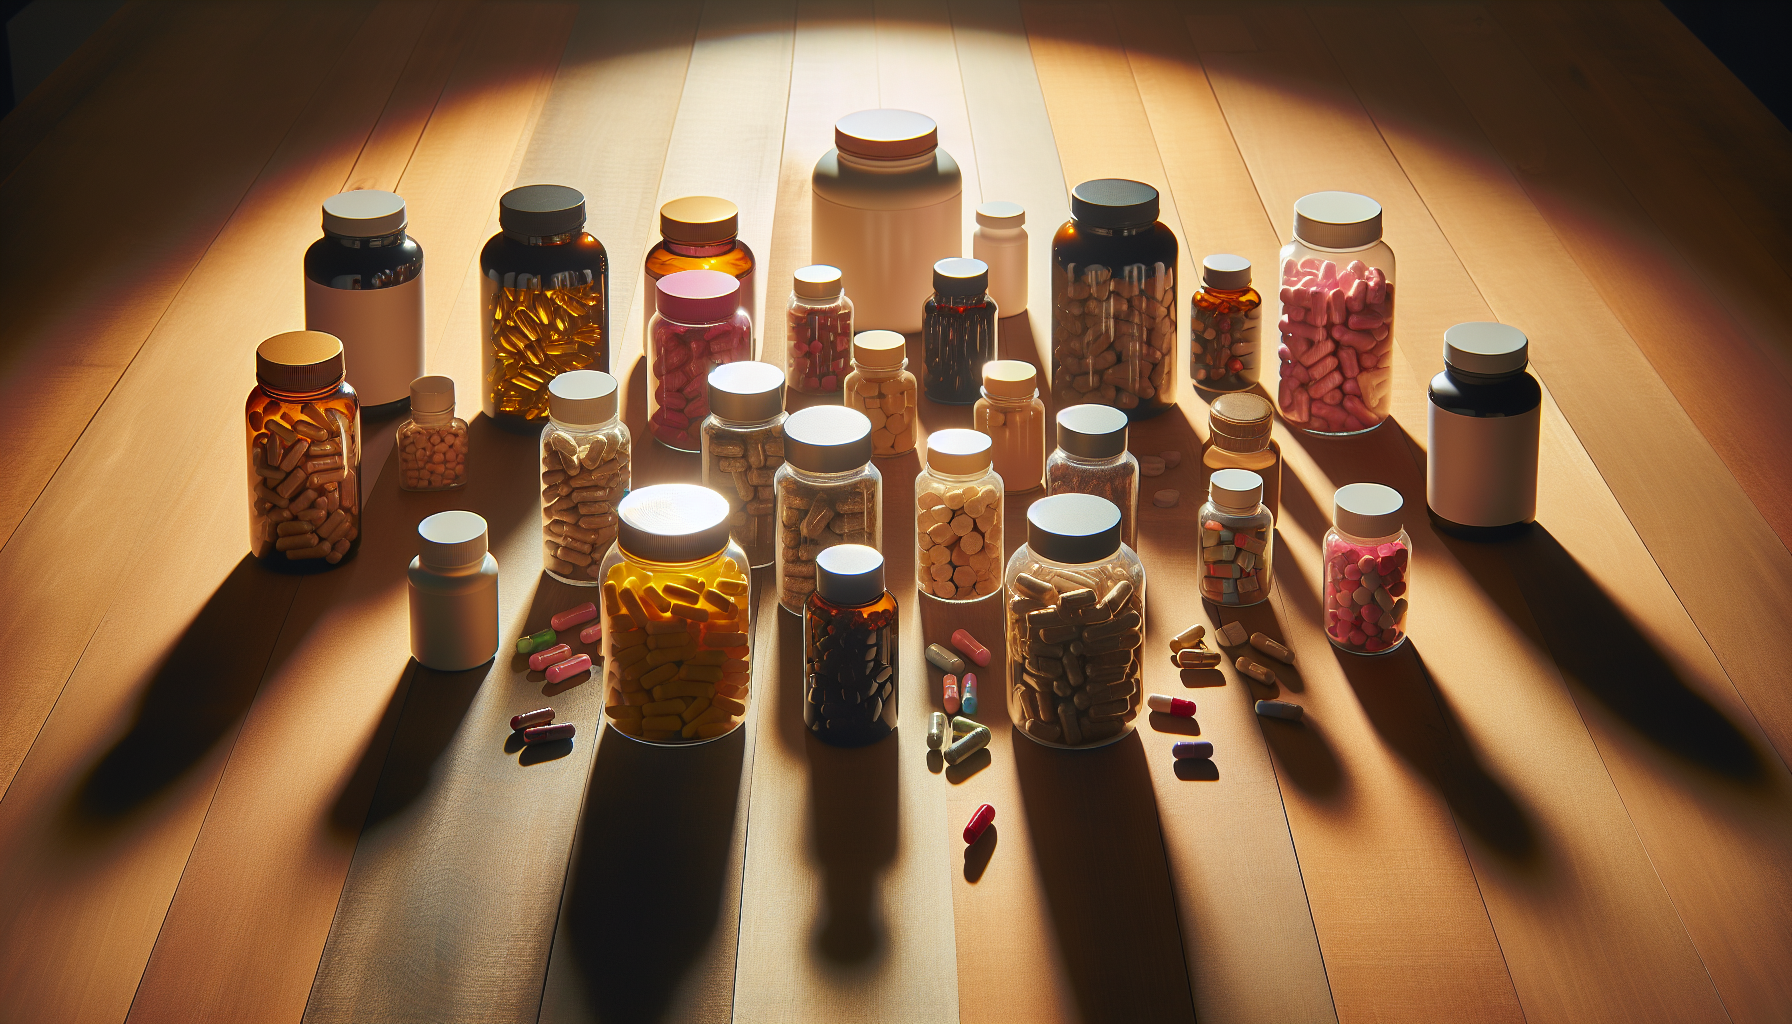 Illustration of various berberine supplement bottles and capsules